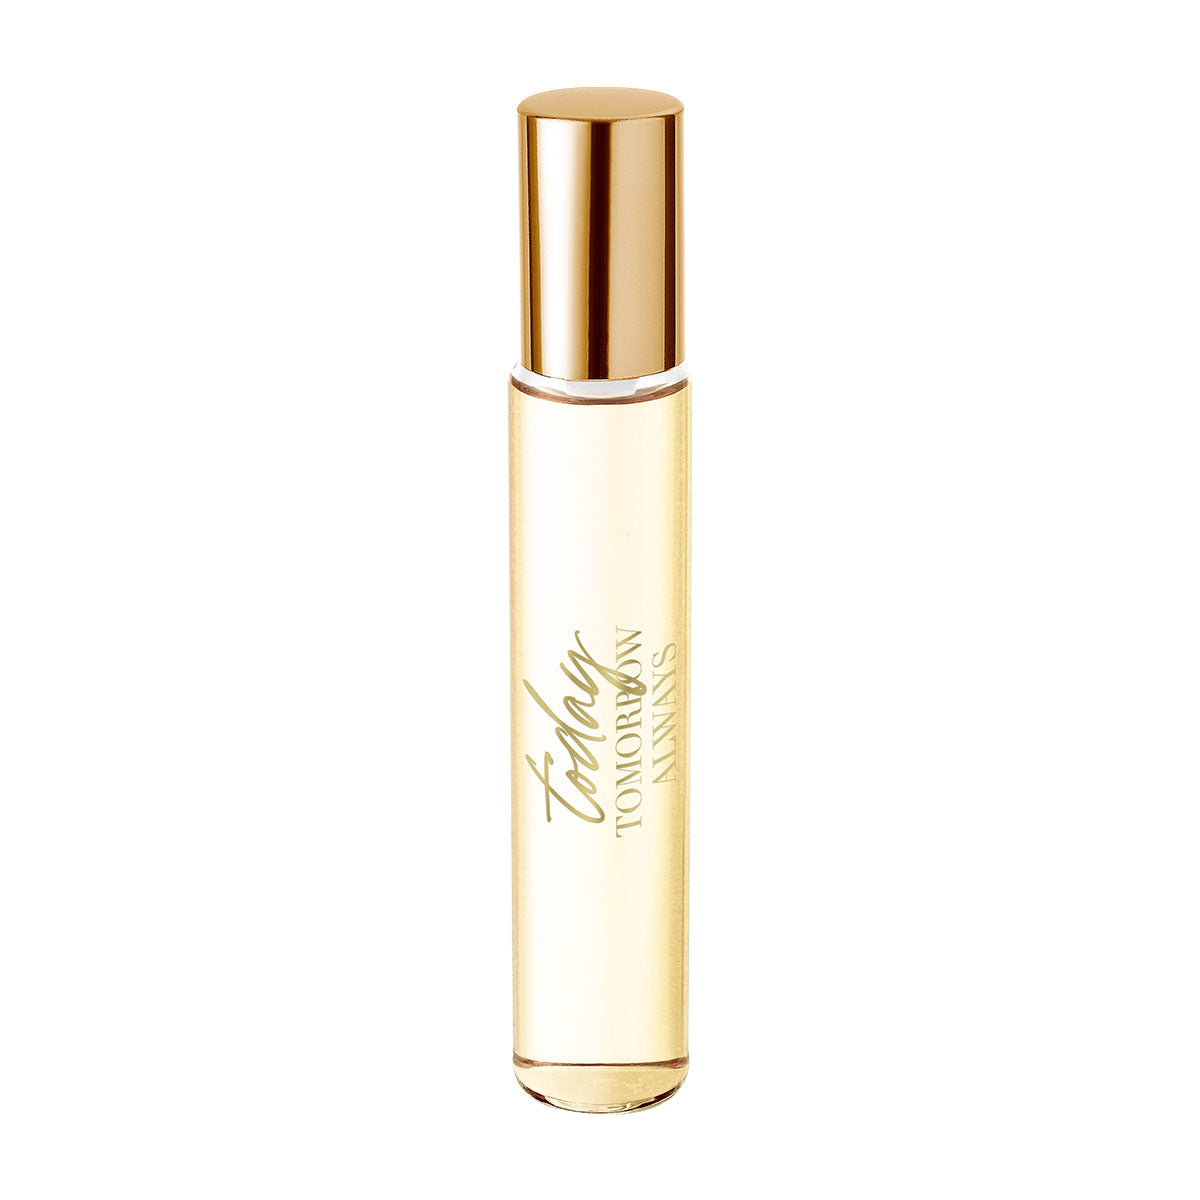 Avon Today Eau de Parfum Purse Spray - 10ml